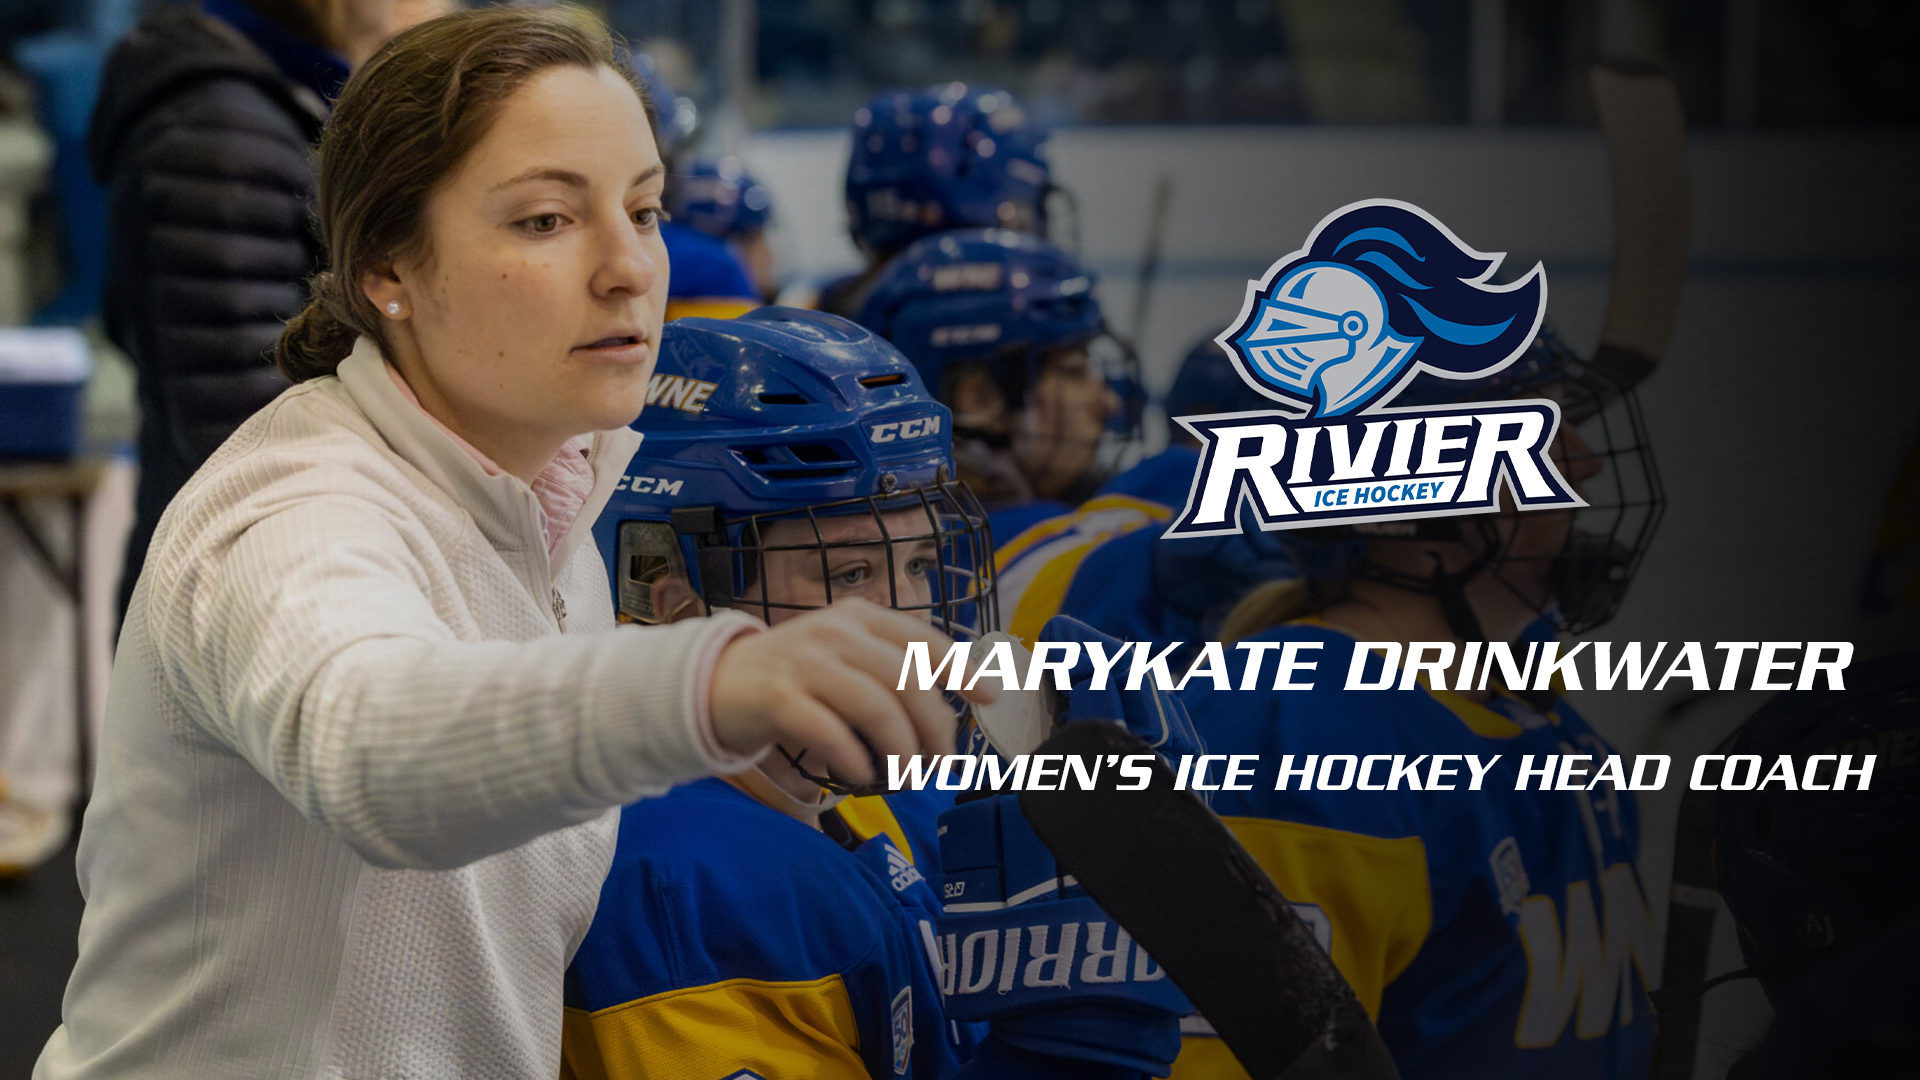 Marykate Drinkwater Named Women’s Ice Hockey Head Coach at Rivier University